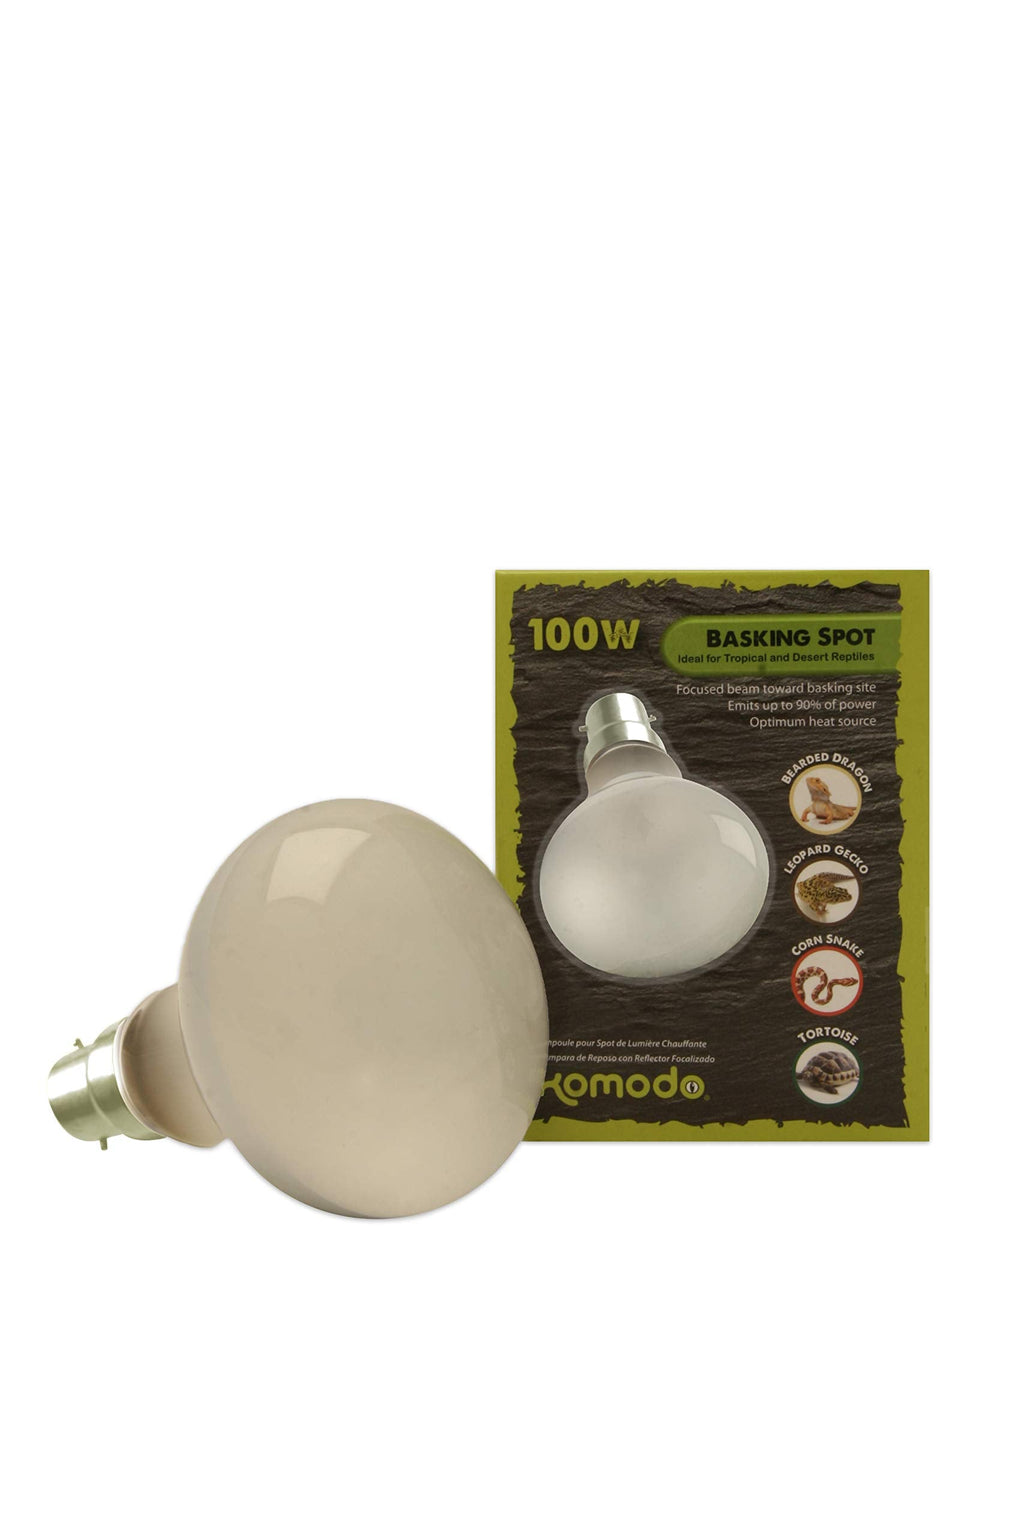 Komodo 100 Watt Basking Spot Bulb, color may vary, 82236 - PawsPlanet Australia